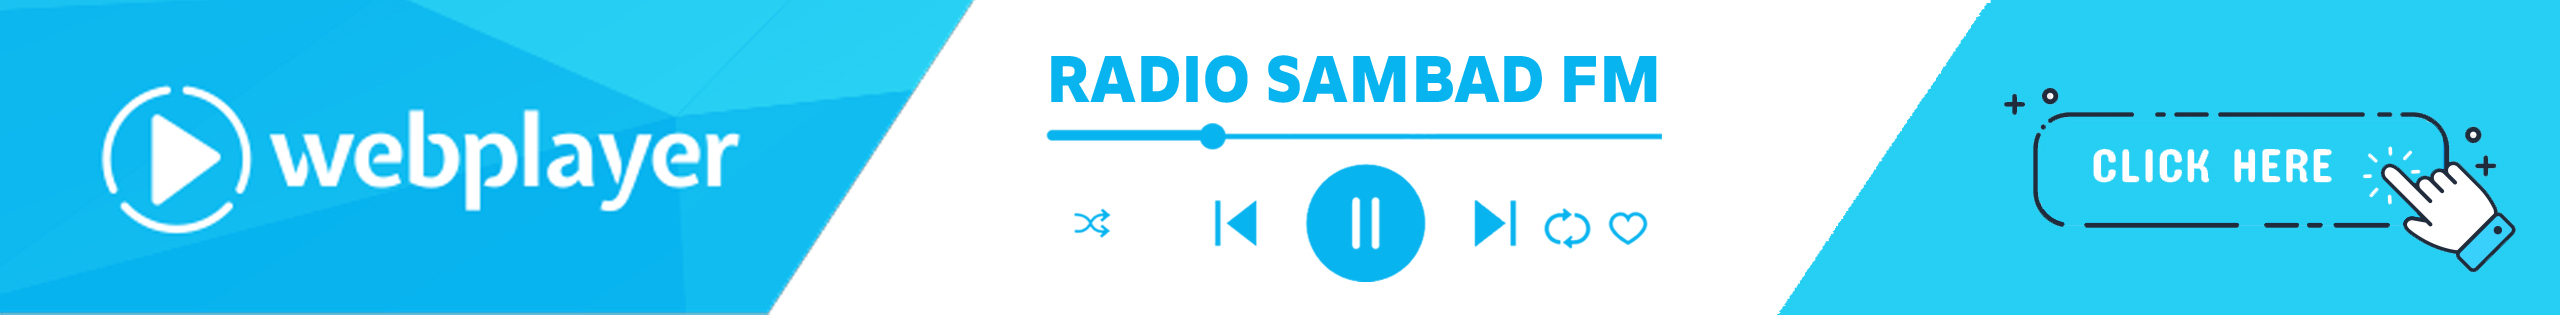 radio-sambad-fm-listen-here